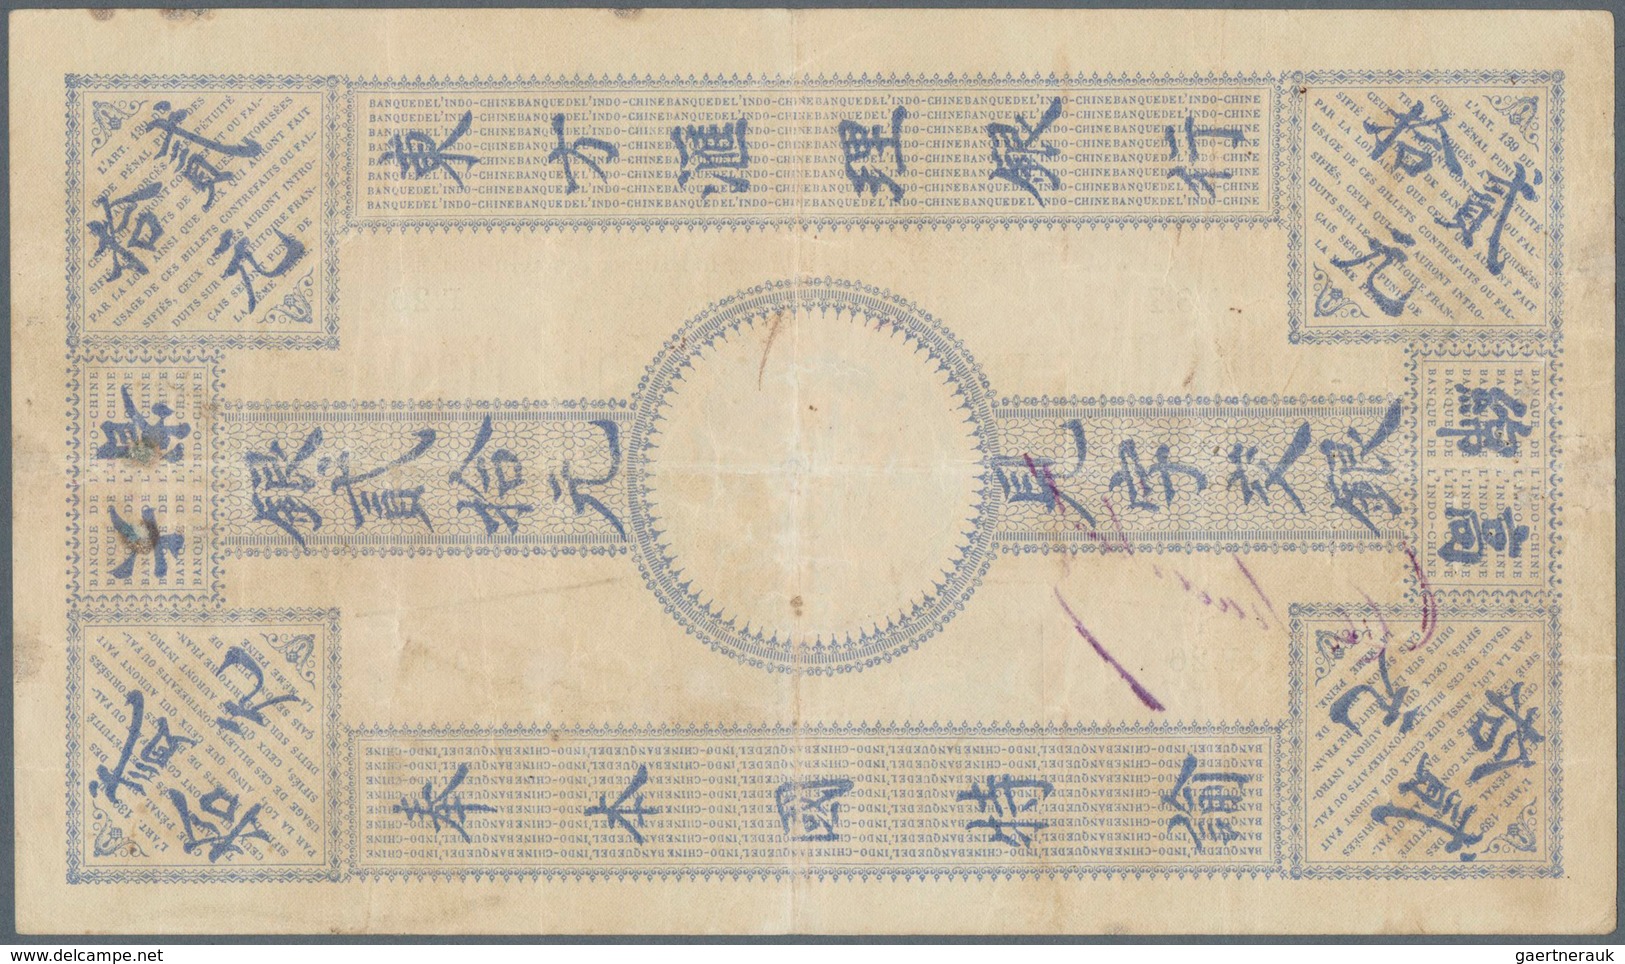 01536 French Indochina / Französisch Indochina: Highly Rare Banknote 20 Piastres 1905 Saigon Banque De L'I - Indochina